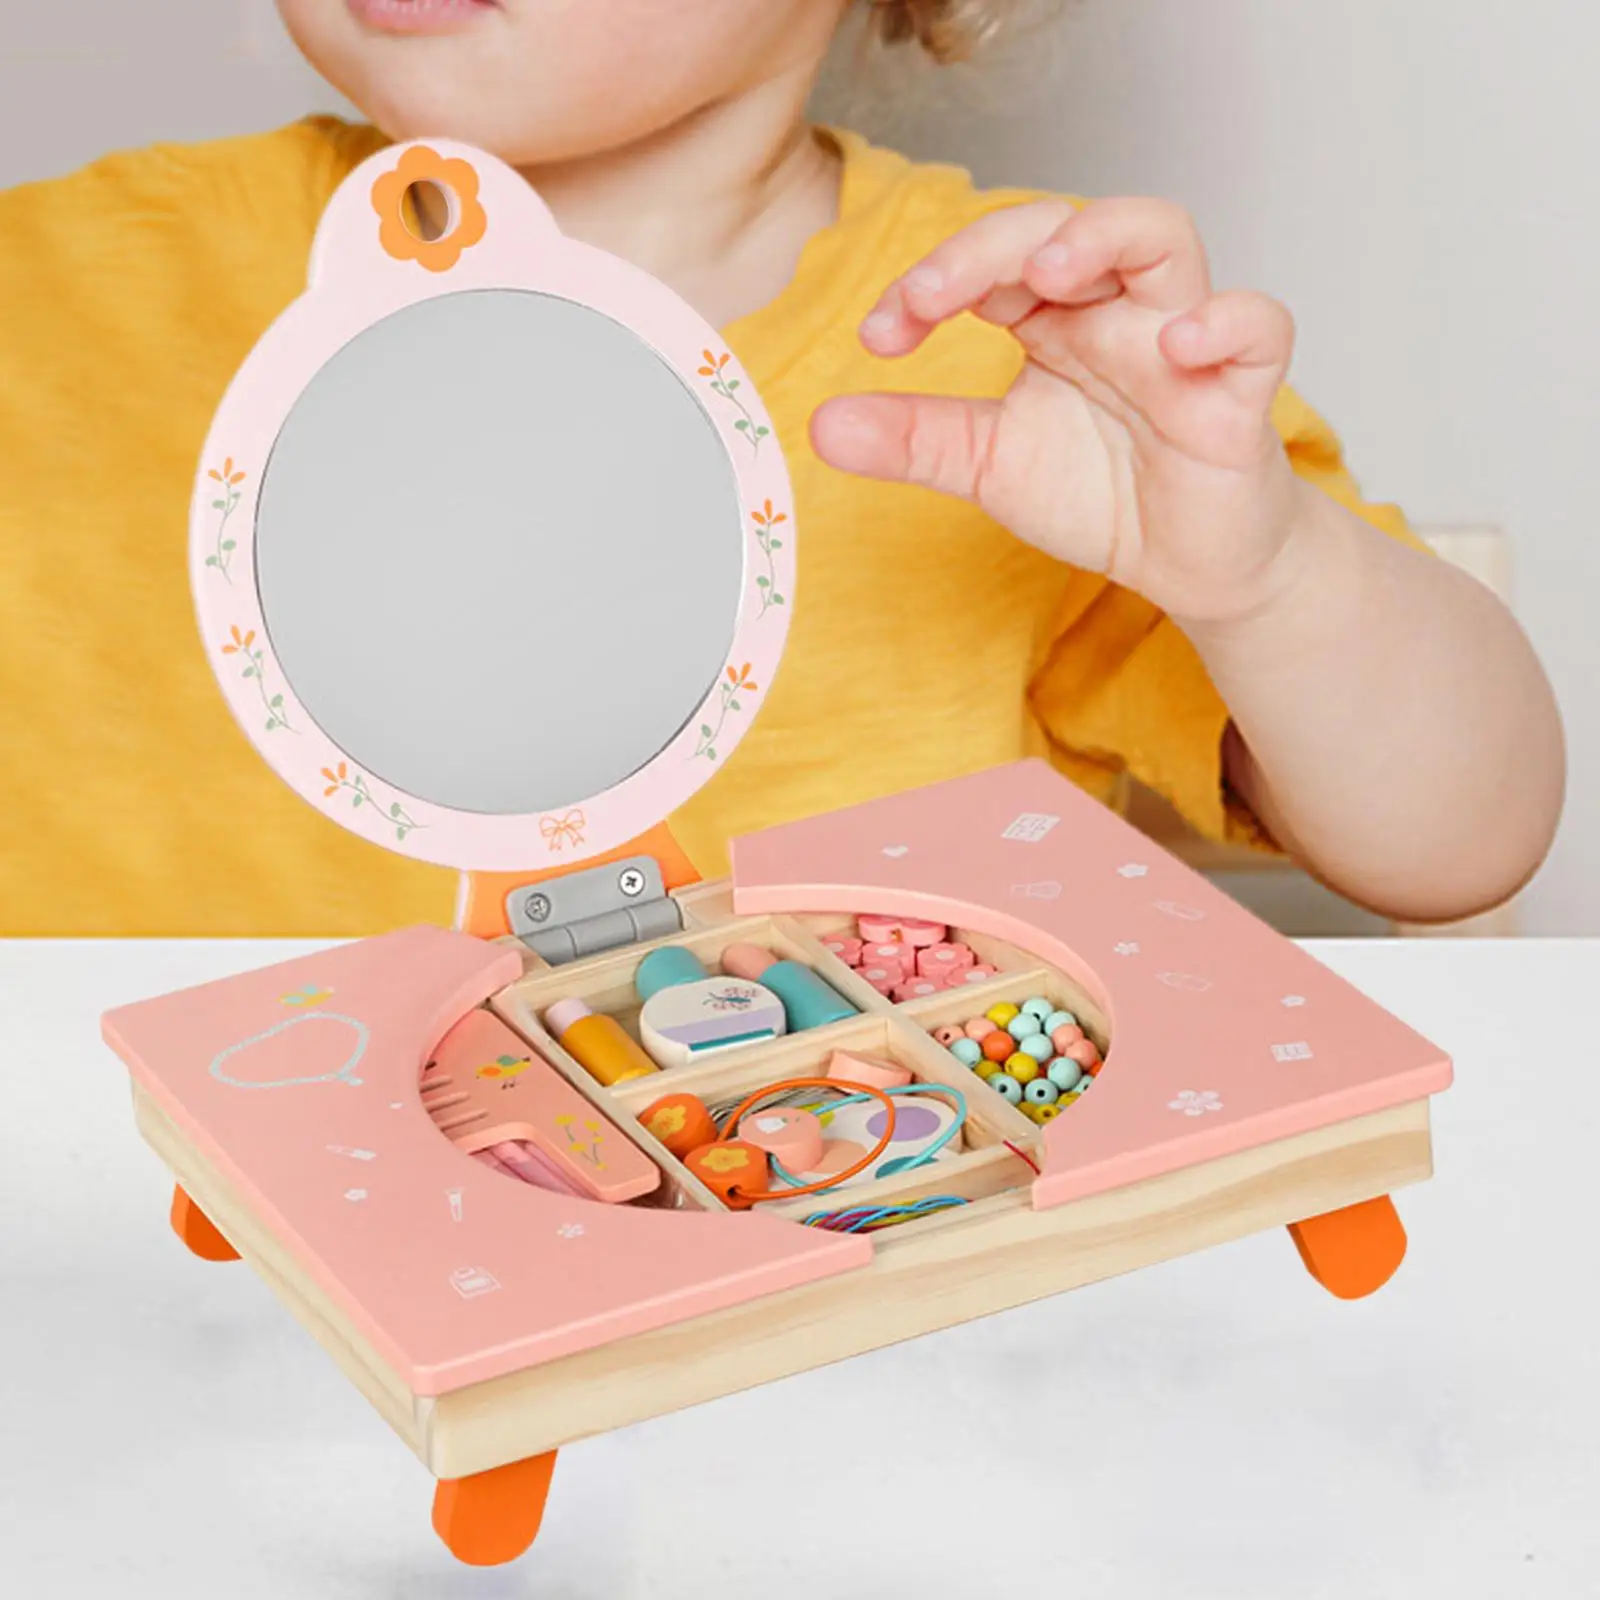 Kids Play Vanity Toy Pretend Cosmetic Makeup Accessories Vanity Set Girls Toys Kids Makeup Vanity Toy for Kids Birthday Gifts